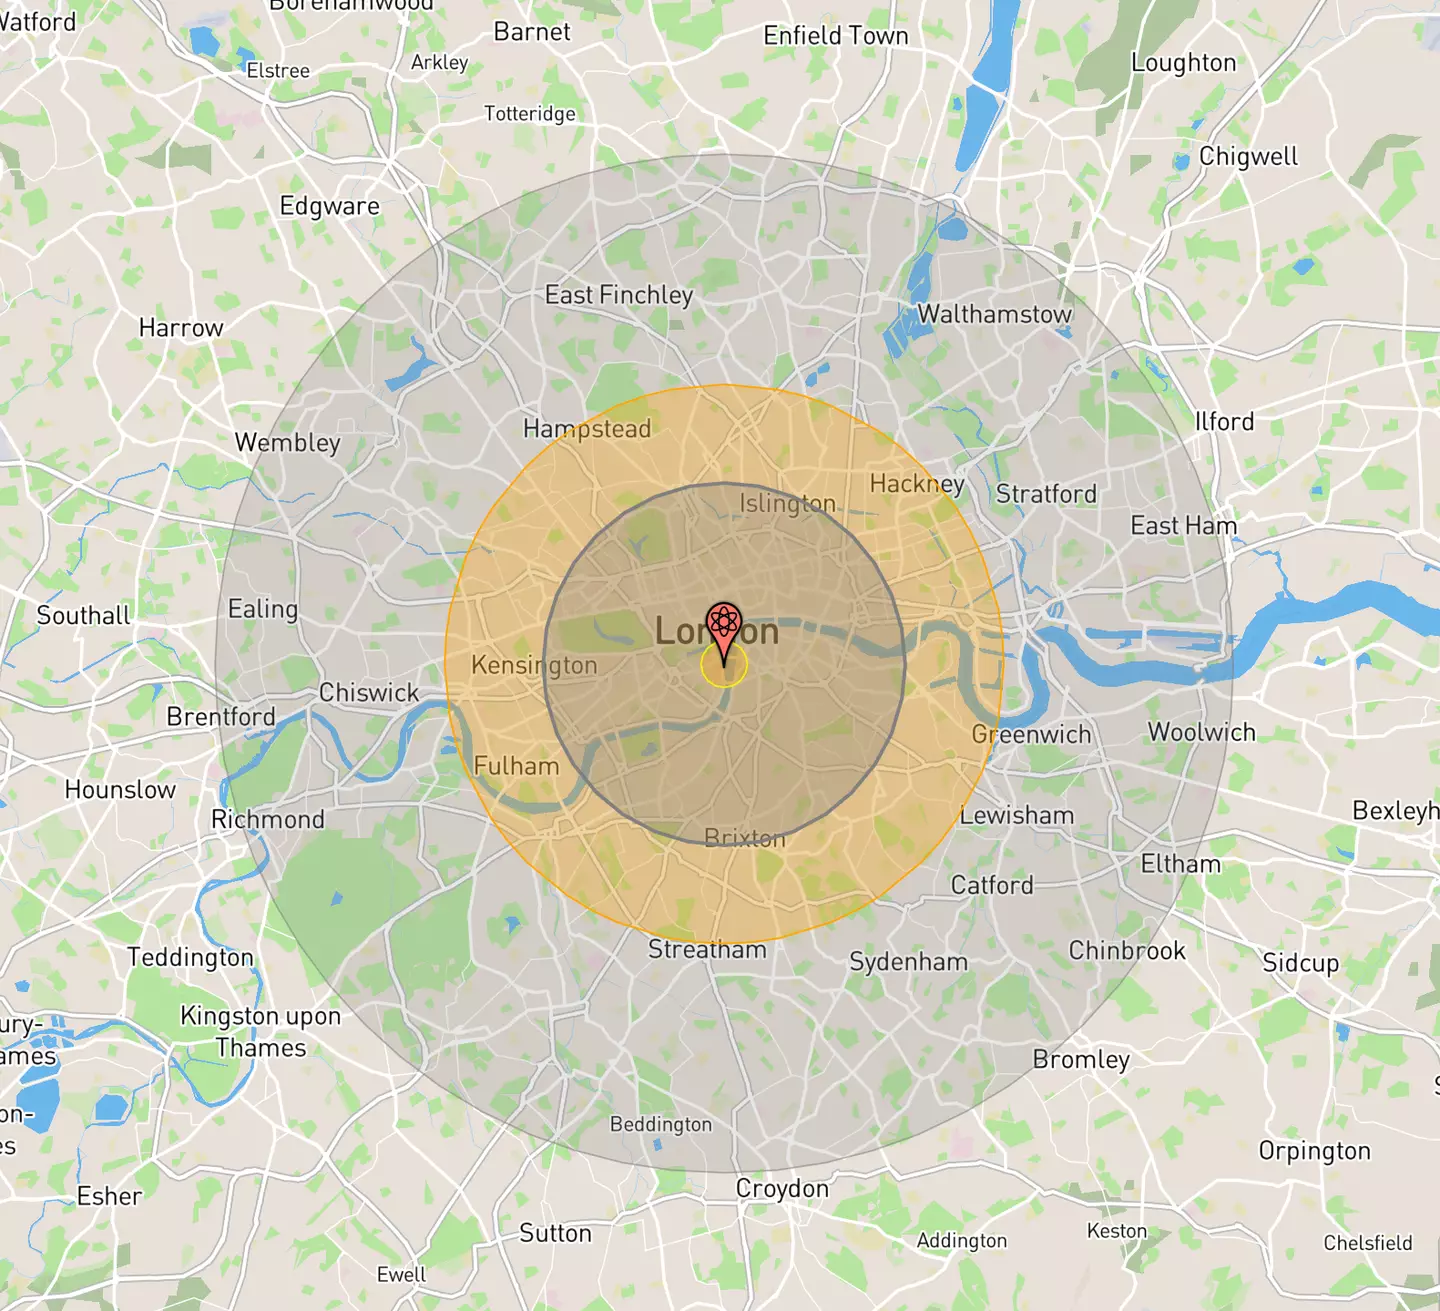 A US nuke detonates over London.